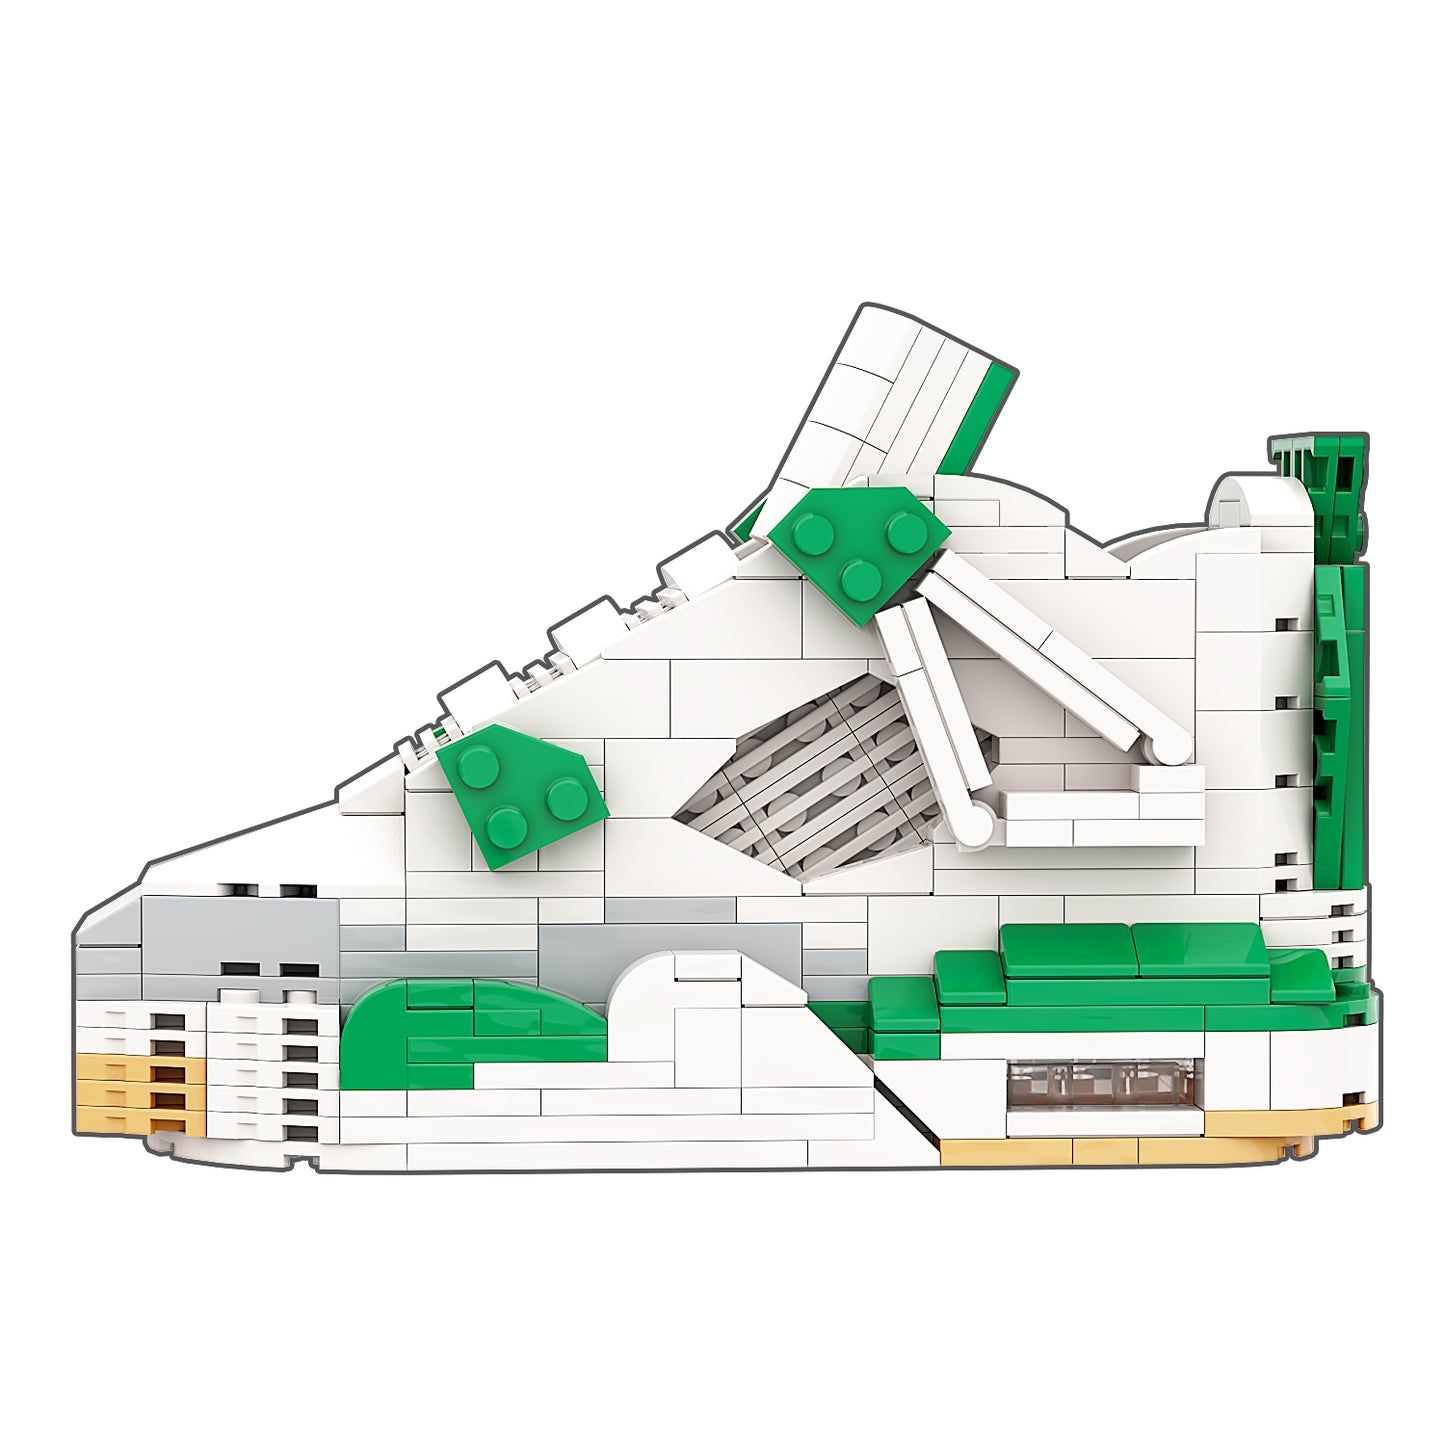 REGULAR AJ4 "SB Pine Green" Sneaker Bricks Sneaker with Mini Figure